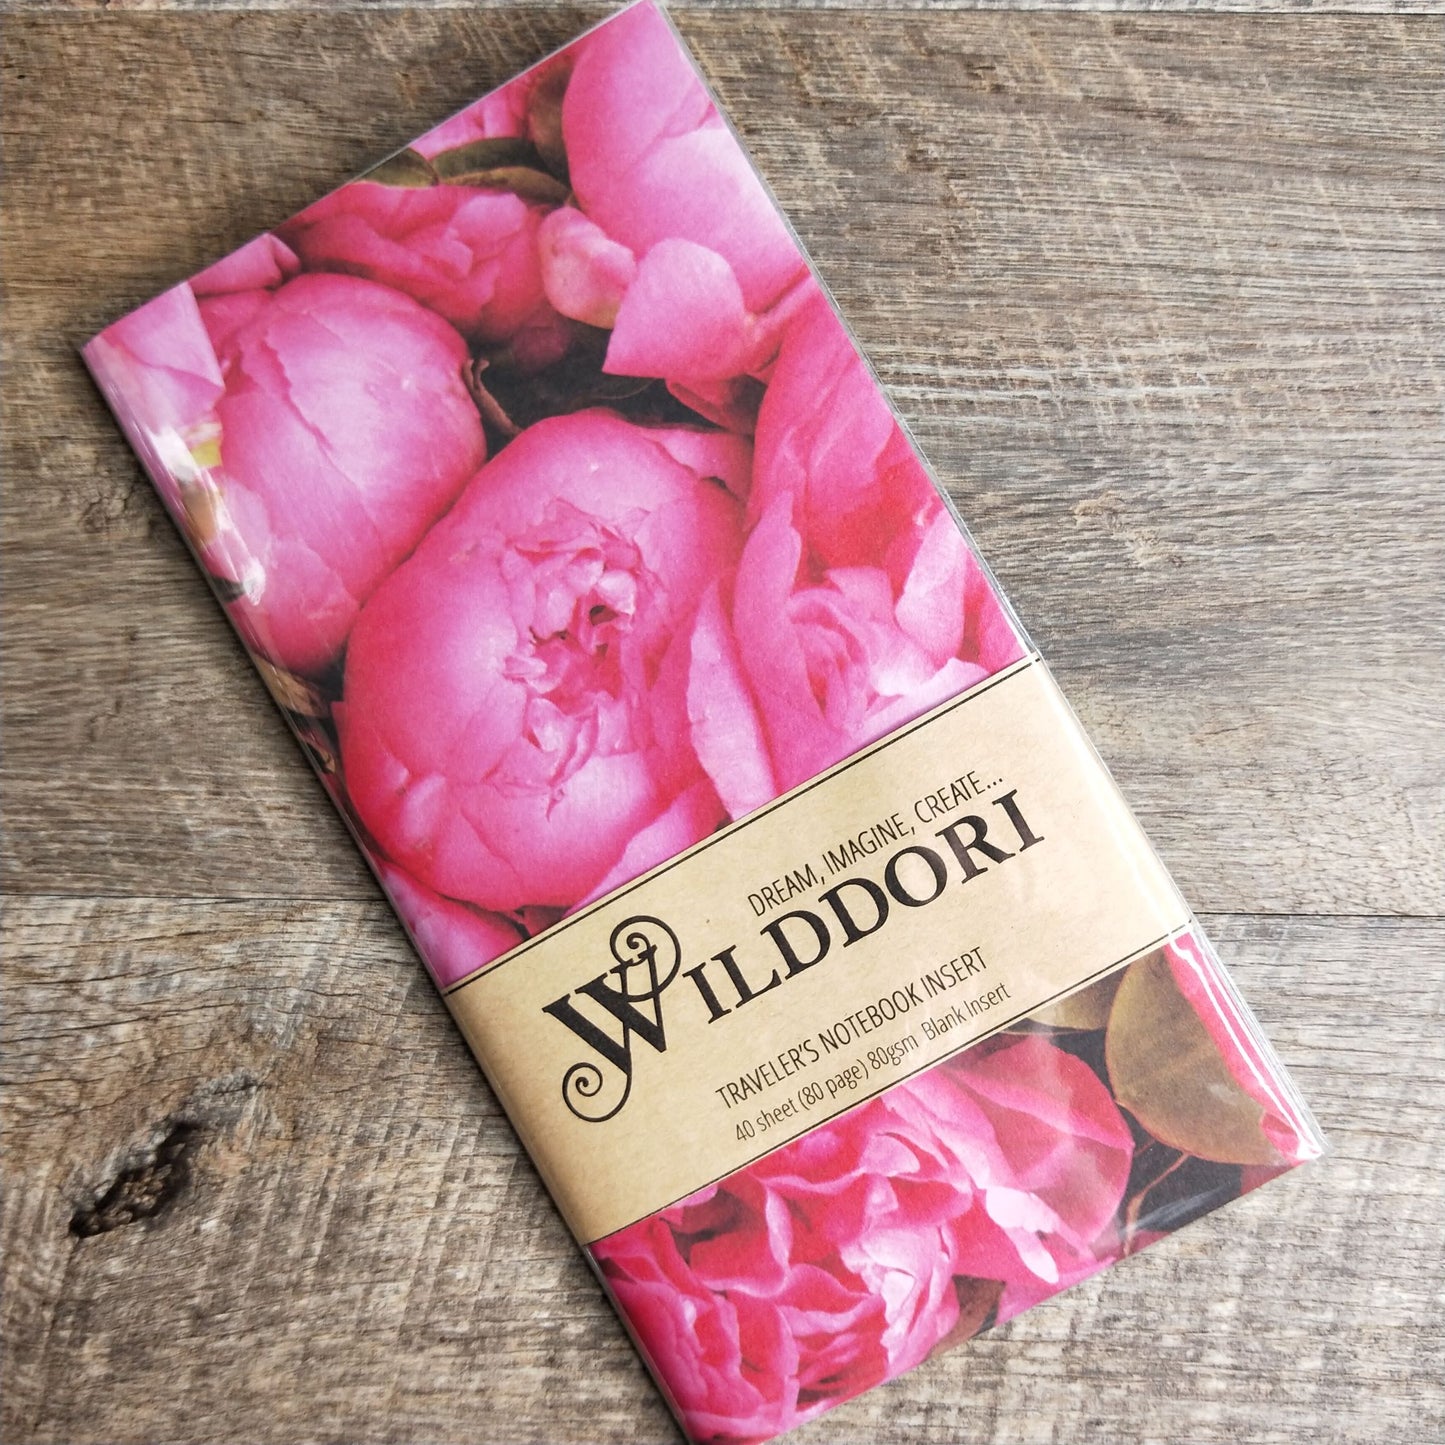 Wilddori 40 sheet Blank Insert - Pink Blooms